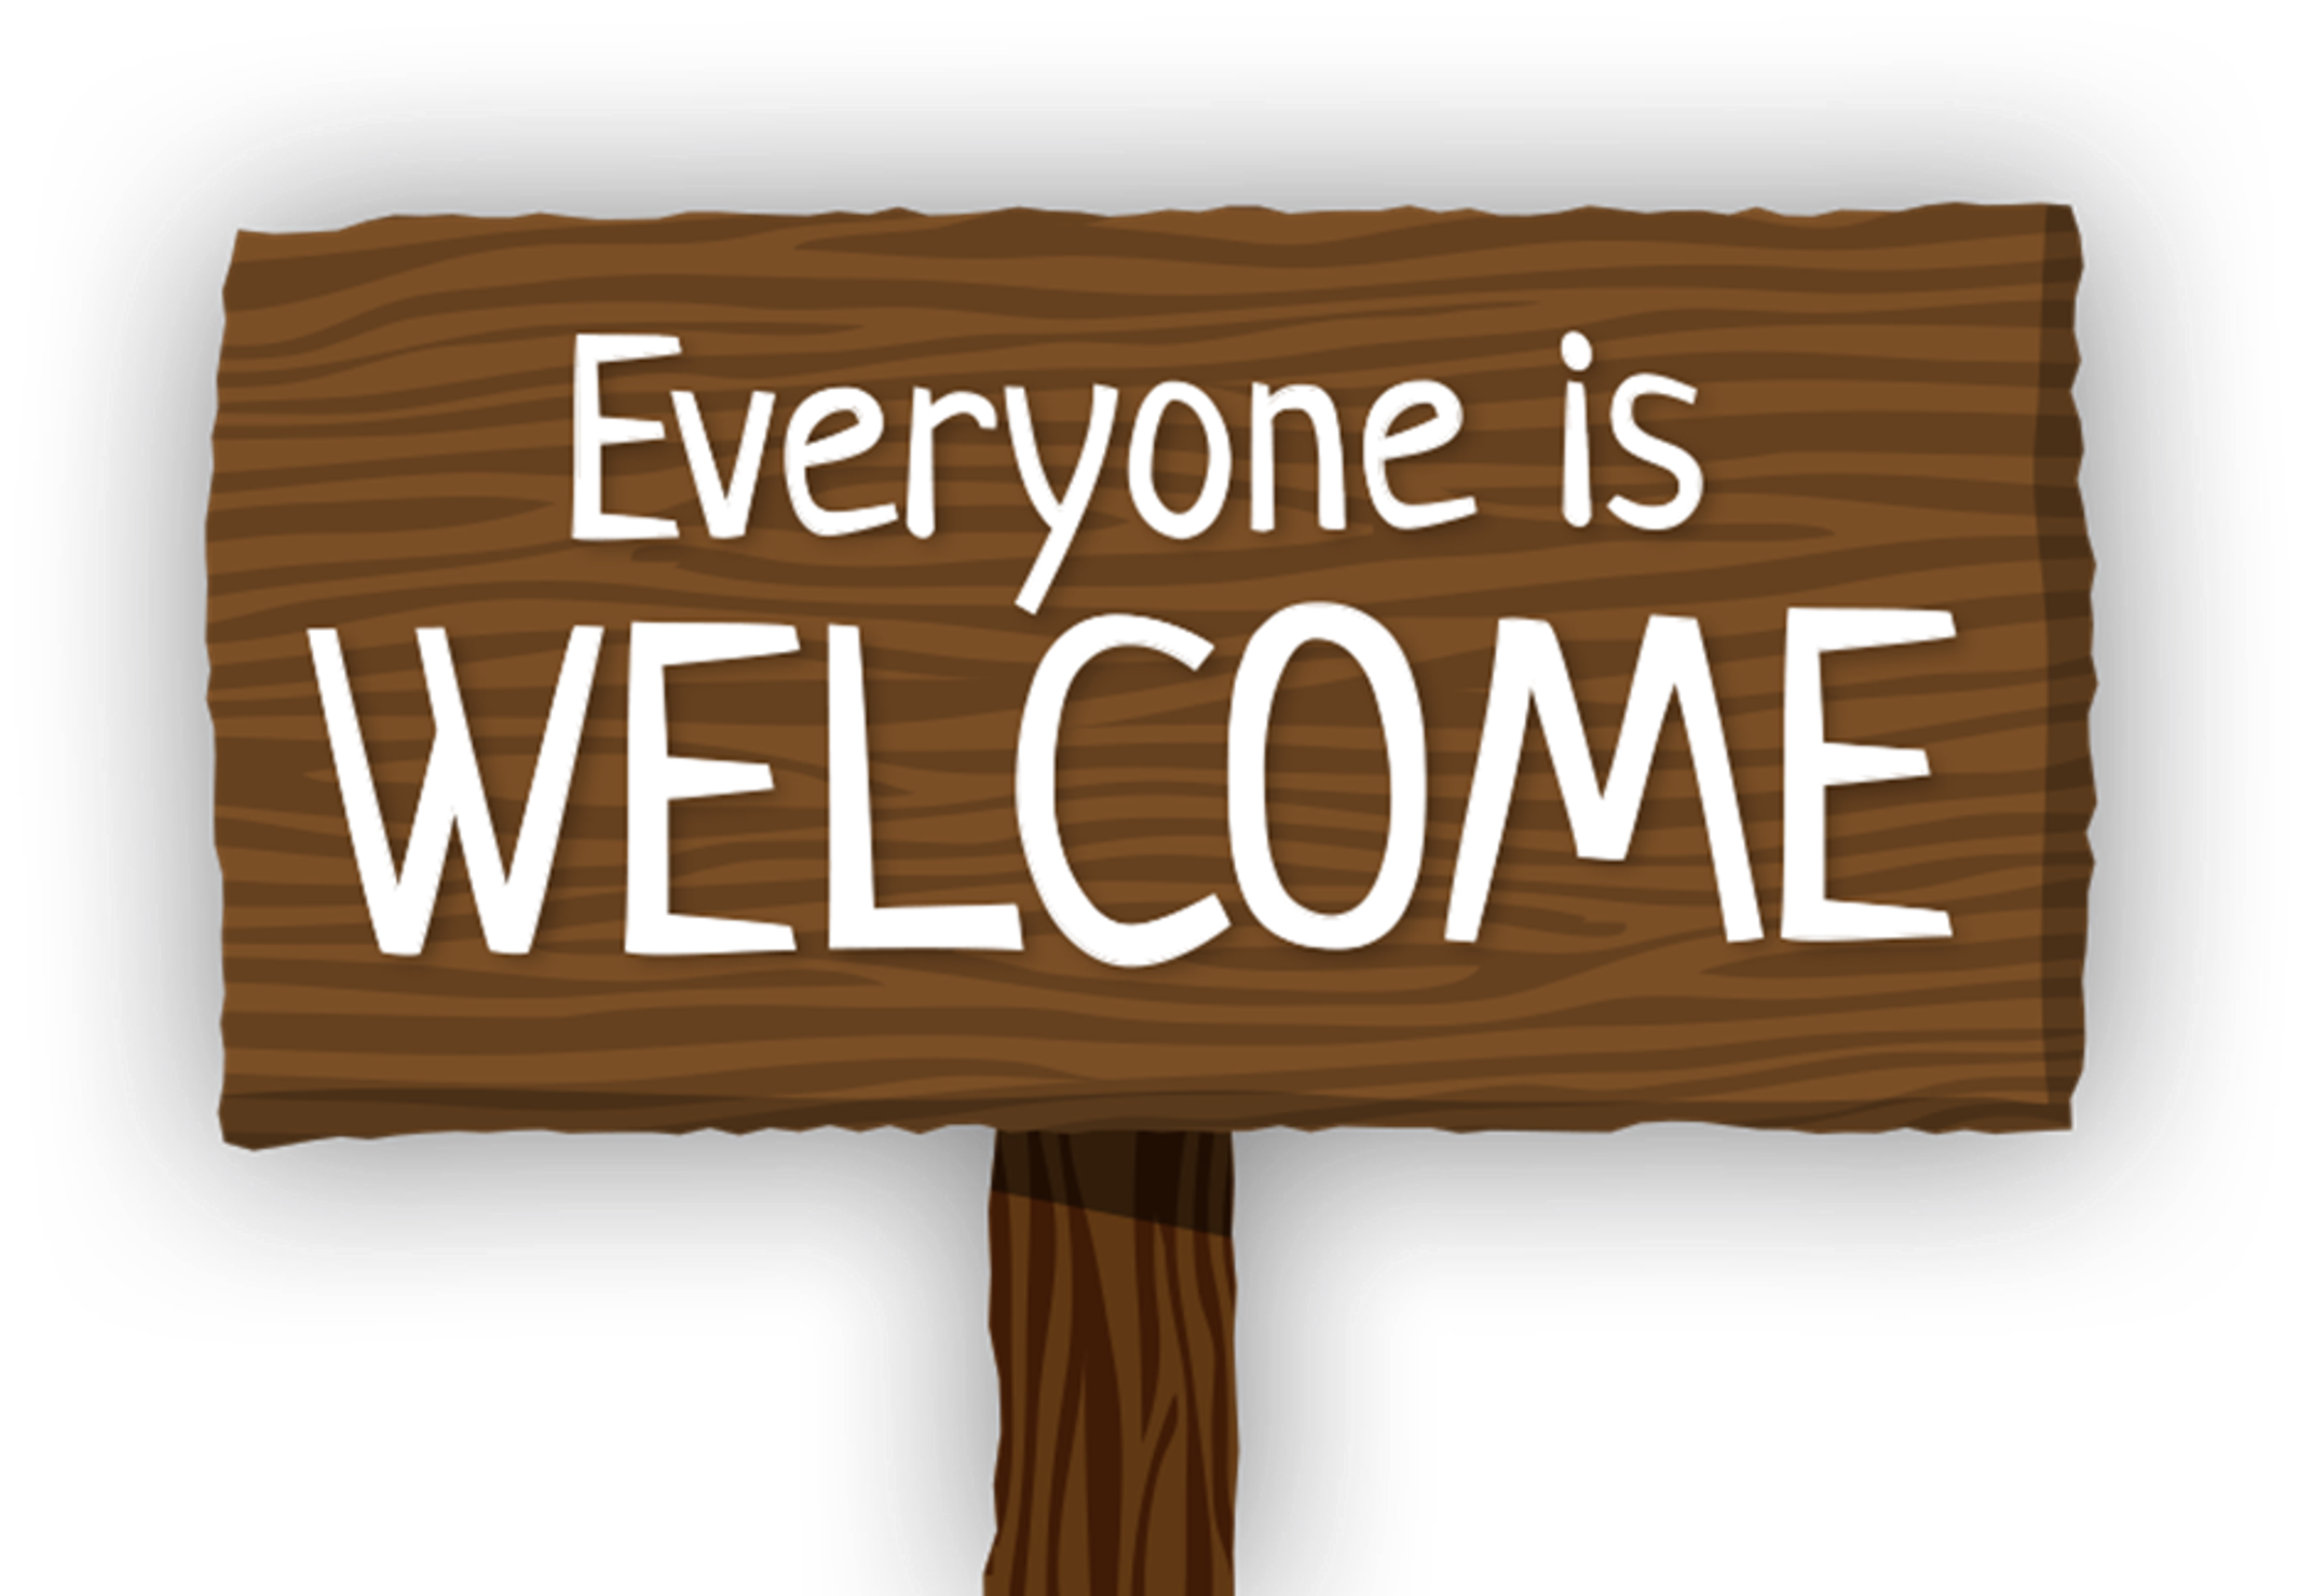 Everyone who likes. Everyone is Welcome. Everyone картинка. Everyone is Welcome or Welcomed. Everyone логотип.